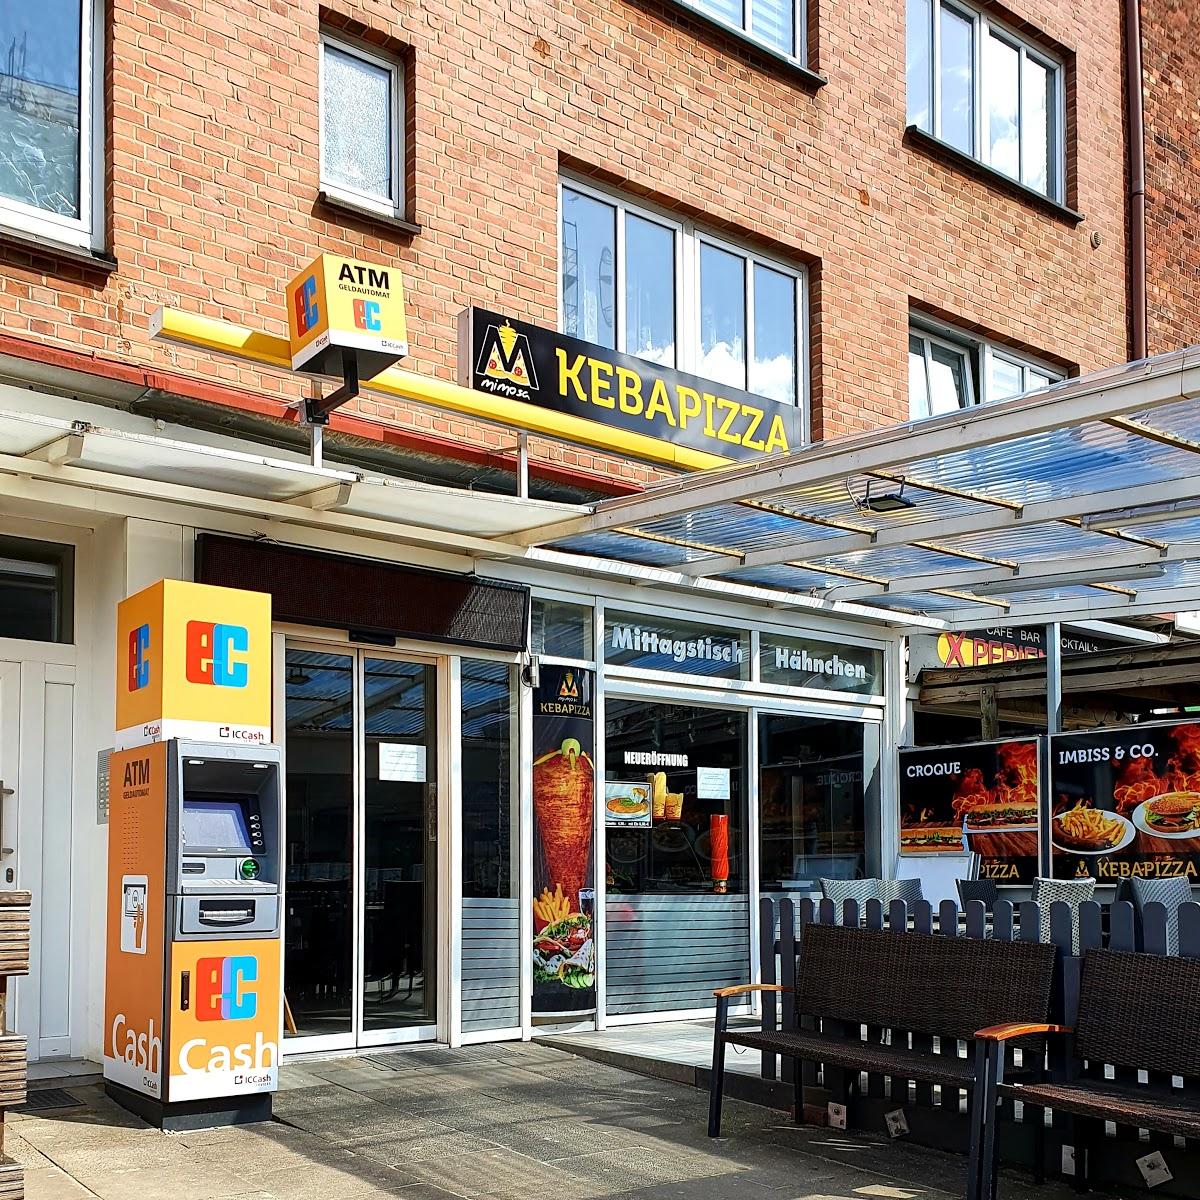 Restaurant "Mimosa Kebapizza" in Hamburg